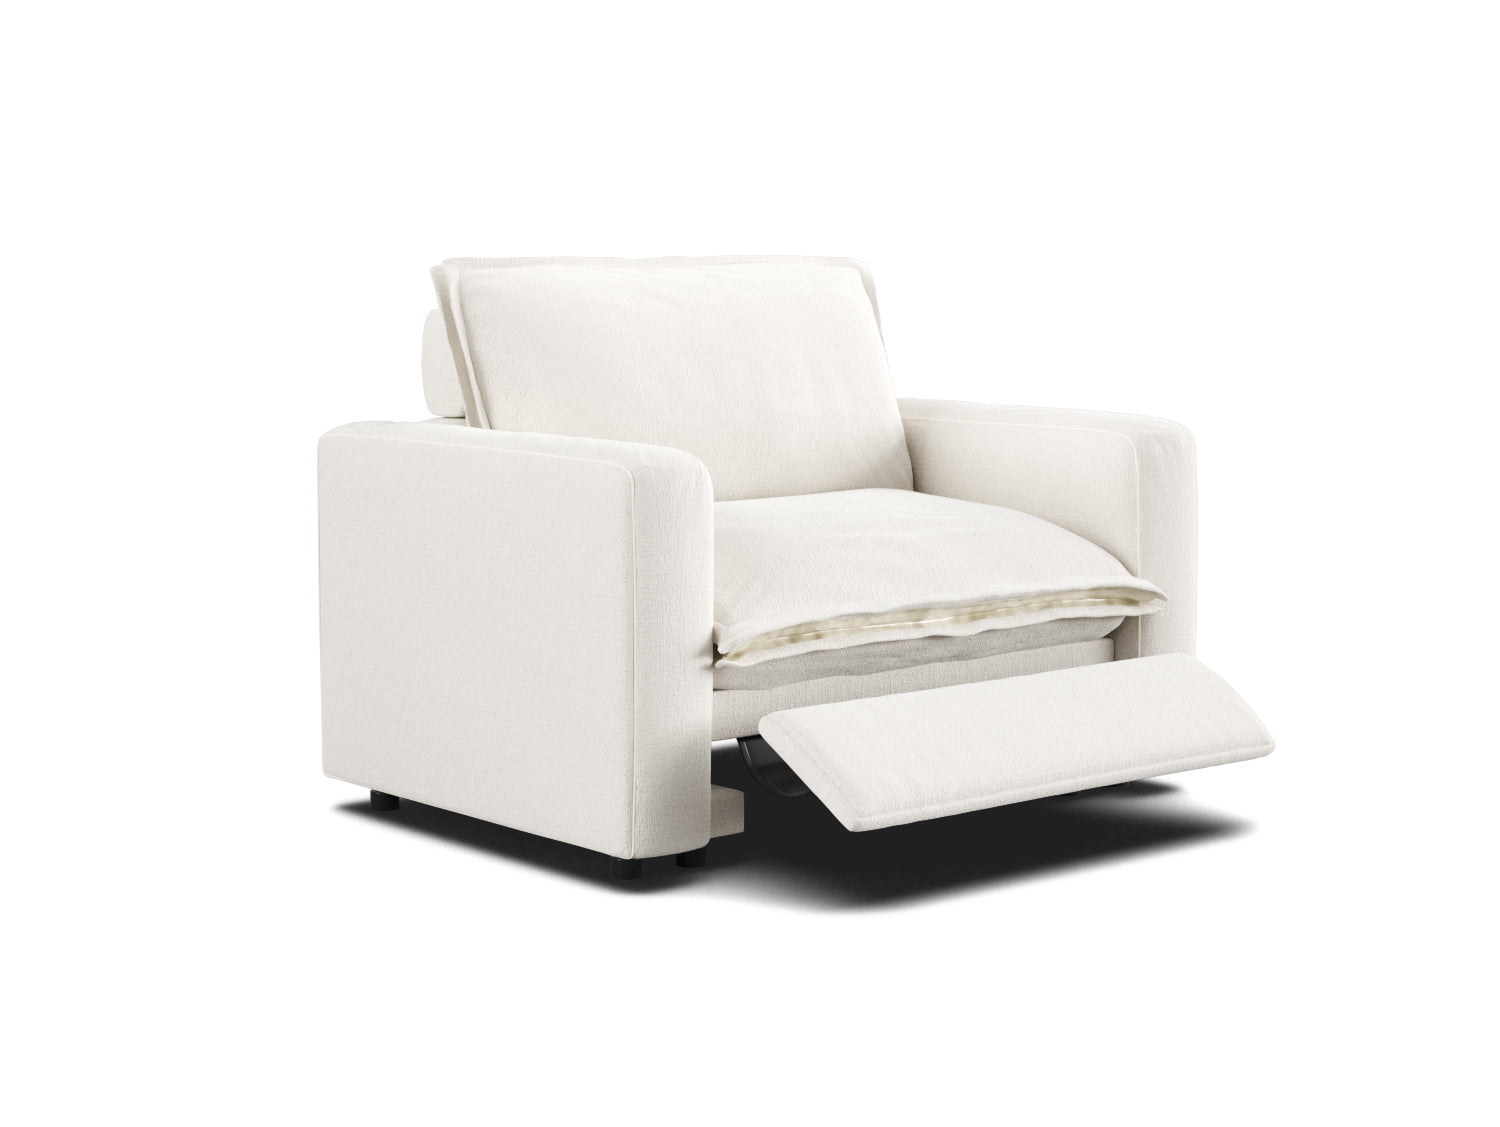 ergonomic back support pushback recliner